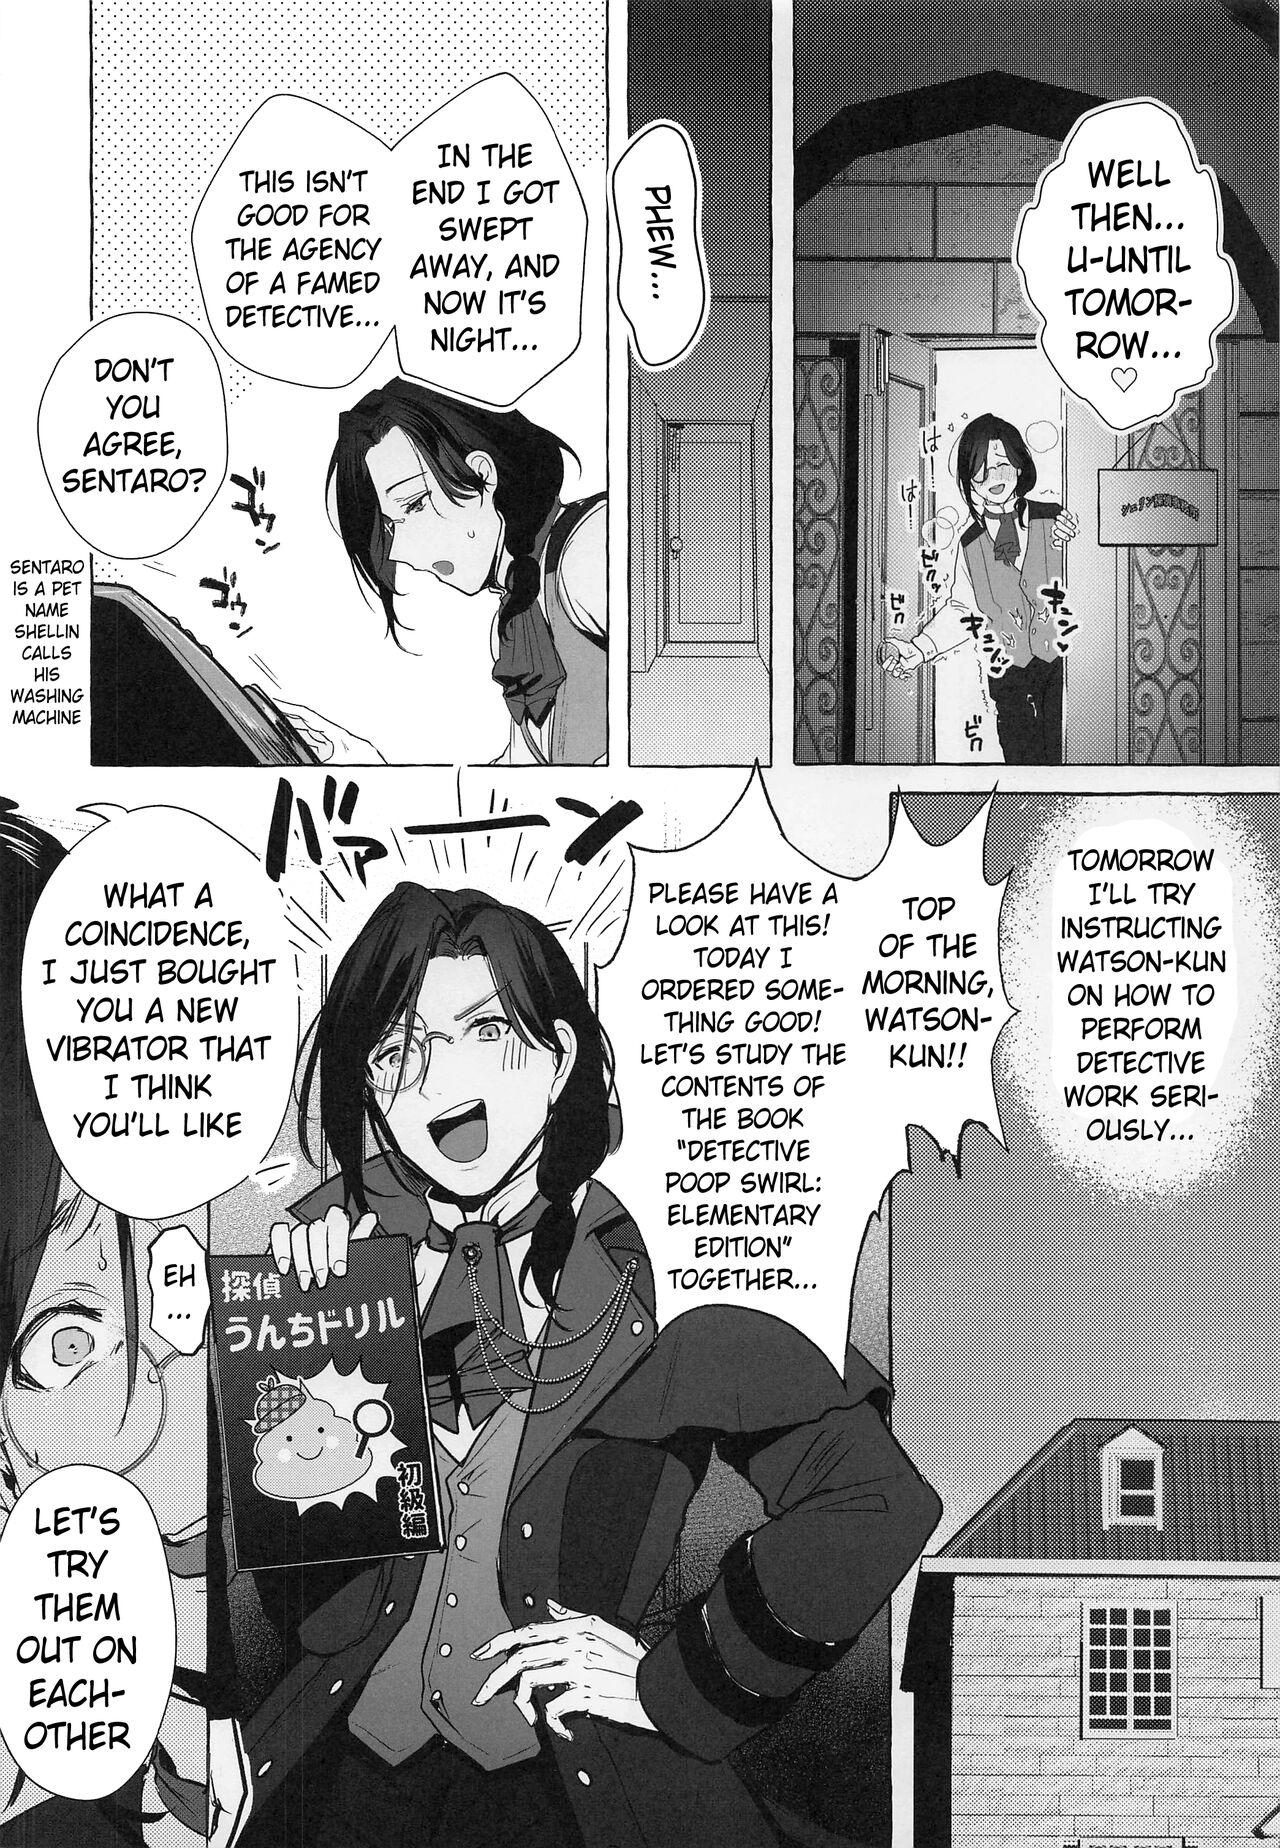 Adorable Meitantei ga Irai wo Kotowaru Hi | The Day the Great Detective Refused a Request - Nijisanji Bukkake Boys - Page 5